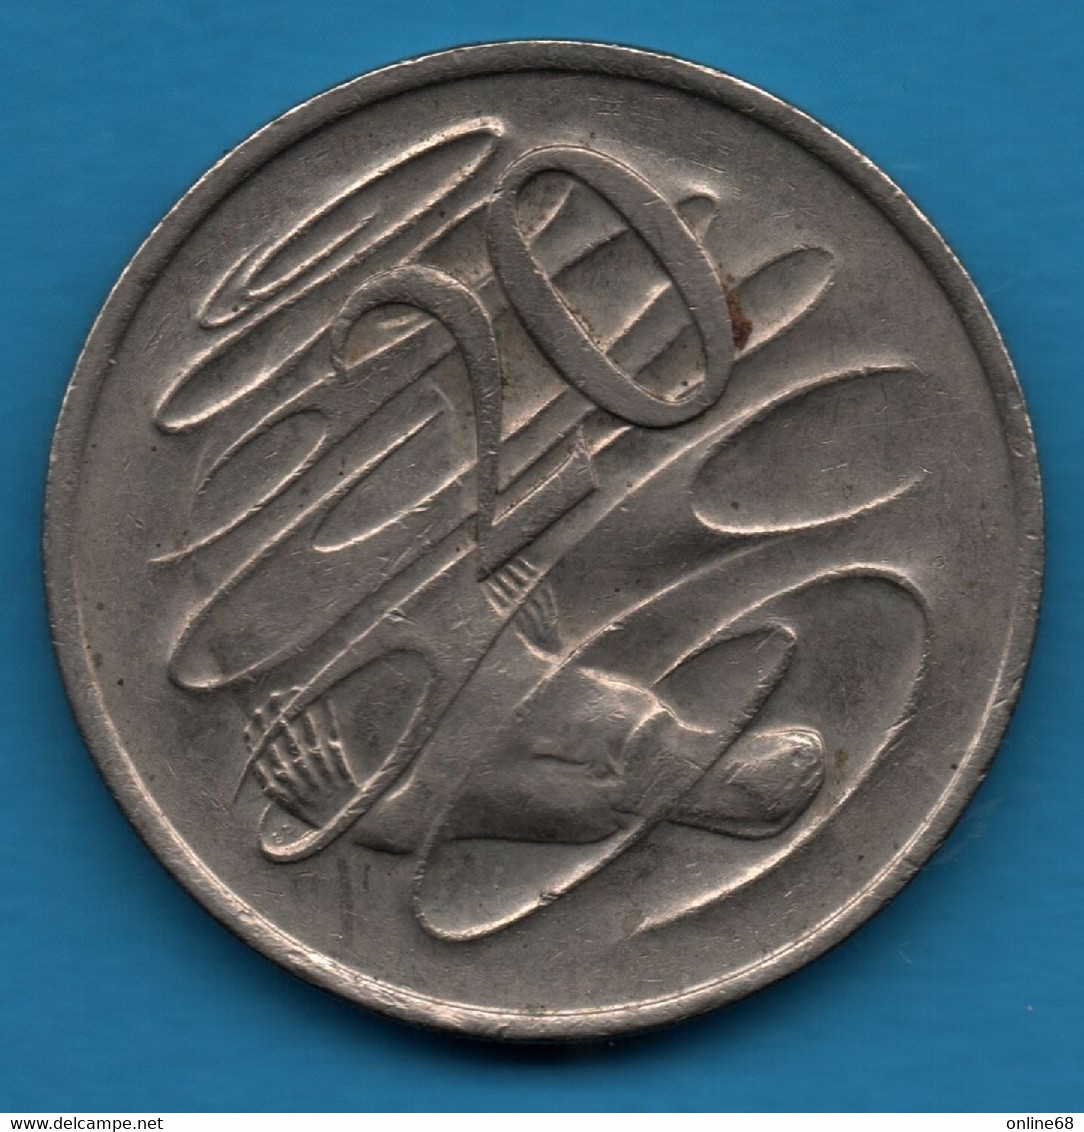 AUSTRALIA 20 CENTS 1976 KM# 66  Ornithorhynchus - 20 Cents